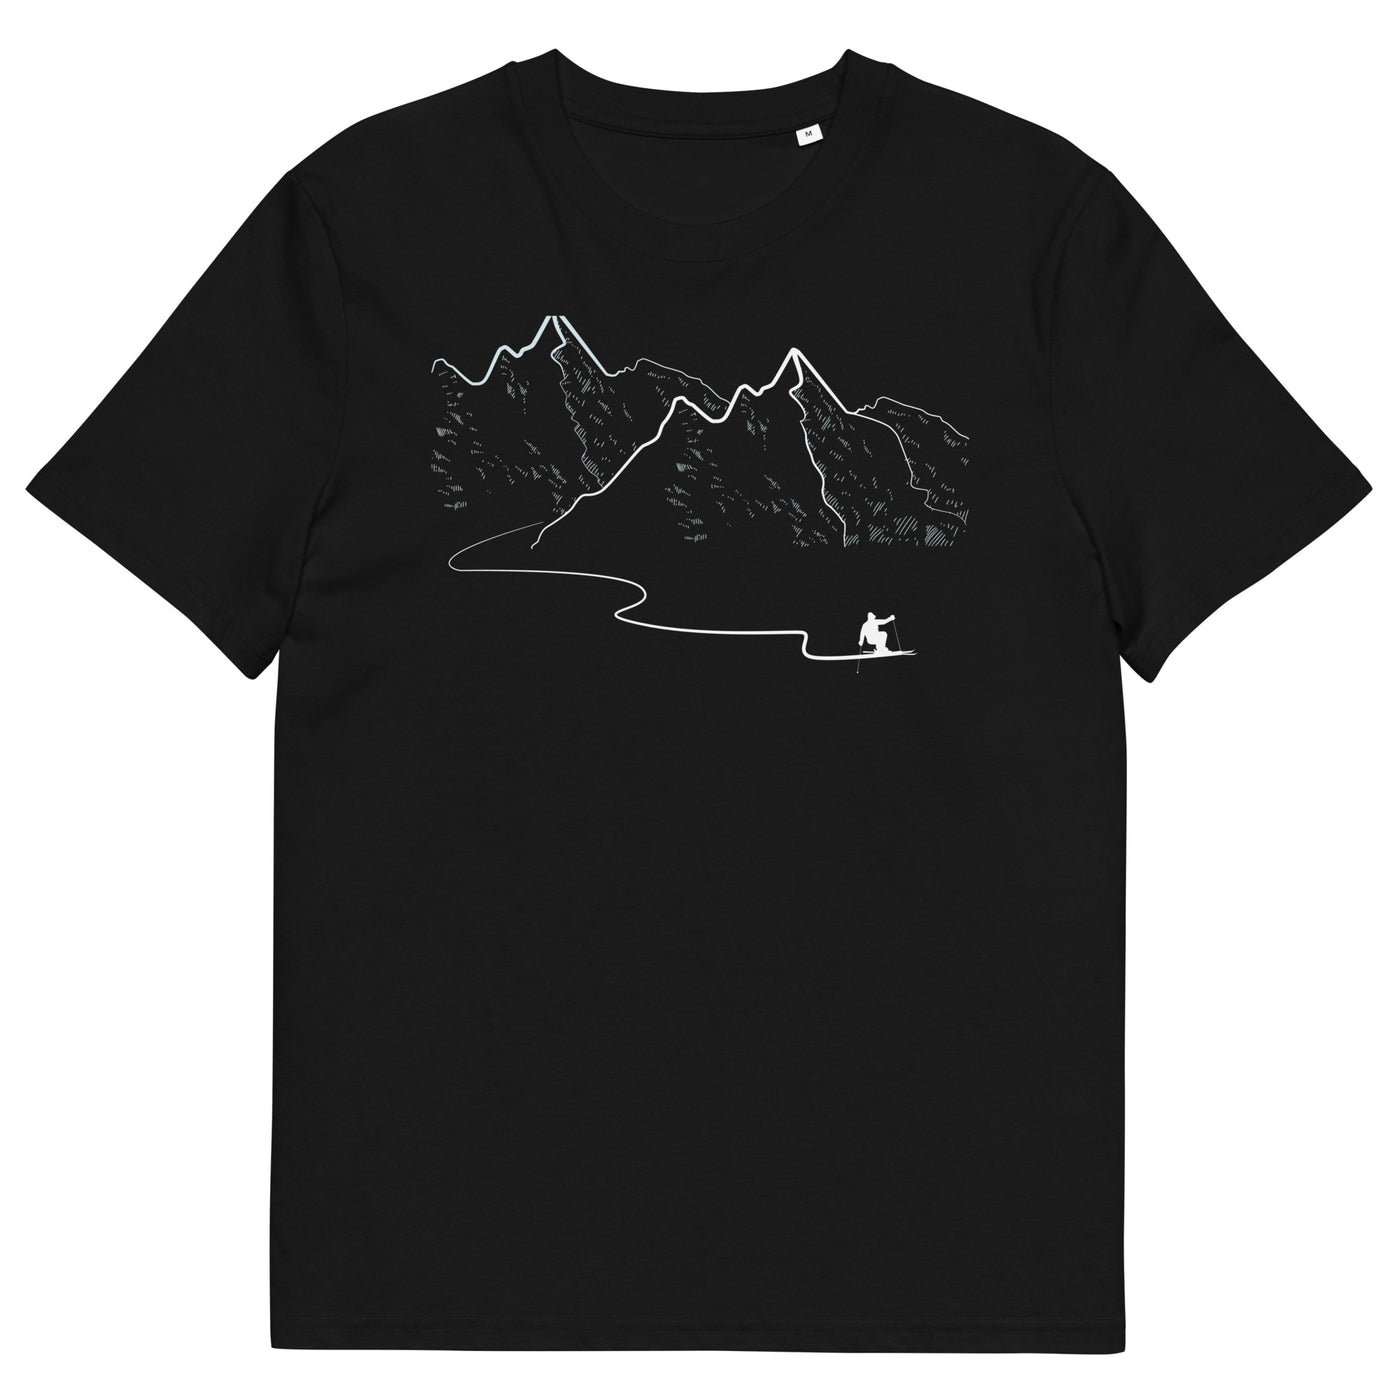 Schifahren - Herren Premium Organic T-Shirt klettern ski xxx yyy zzz Black